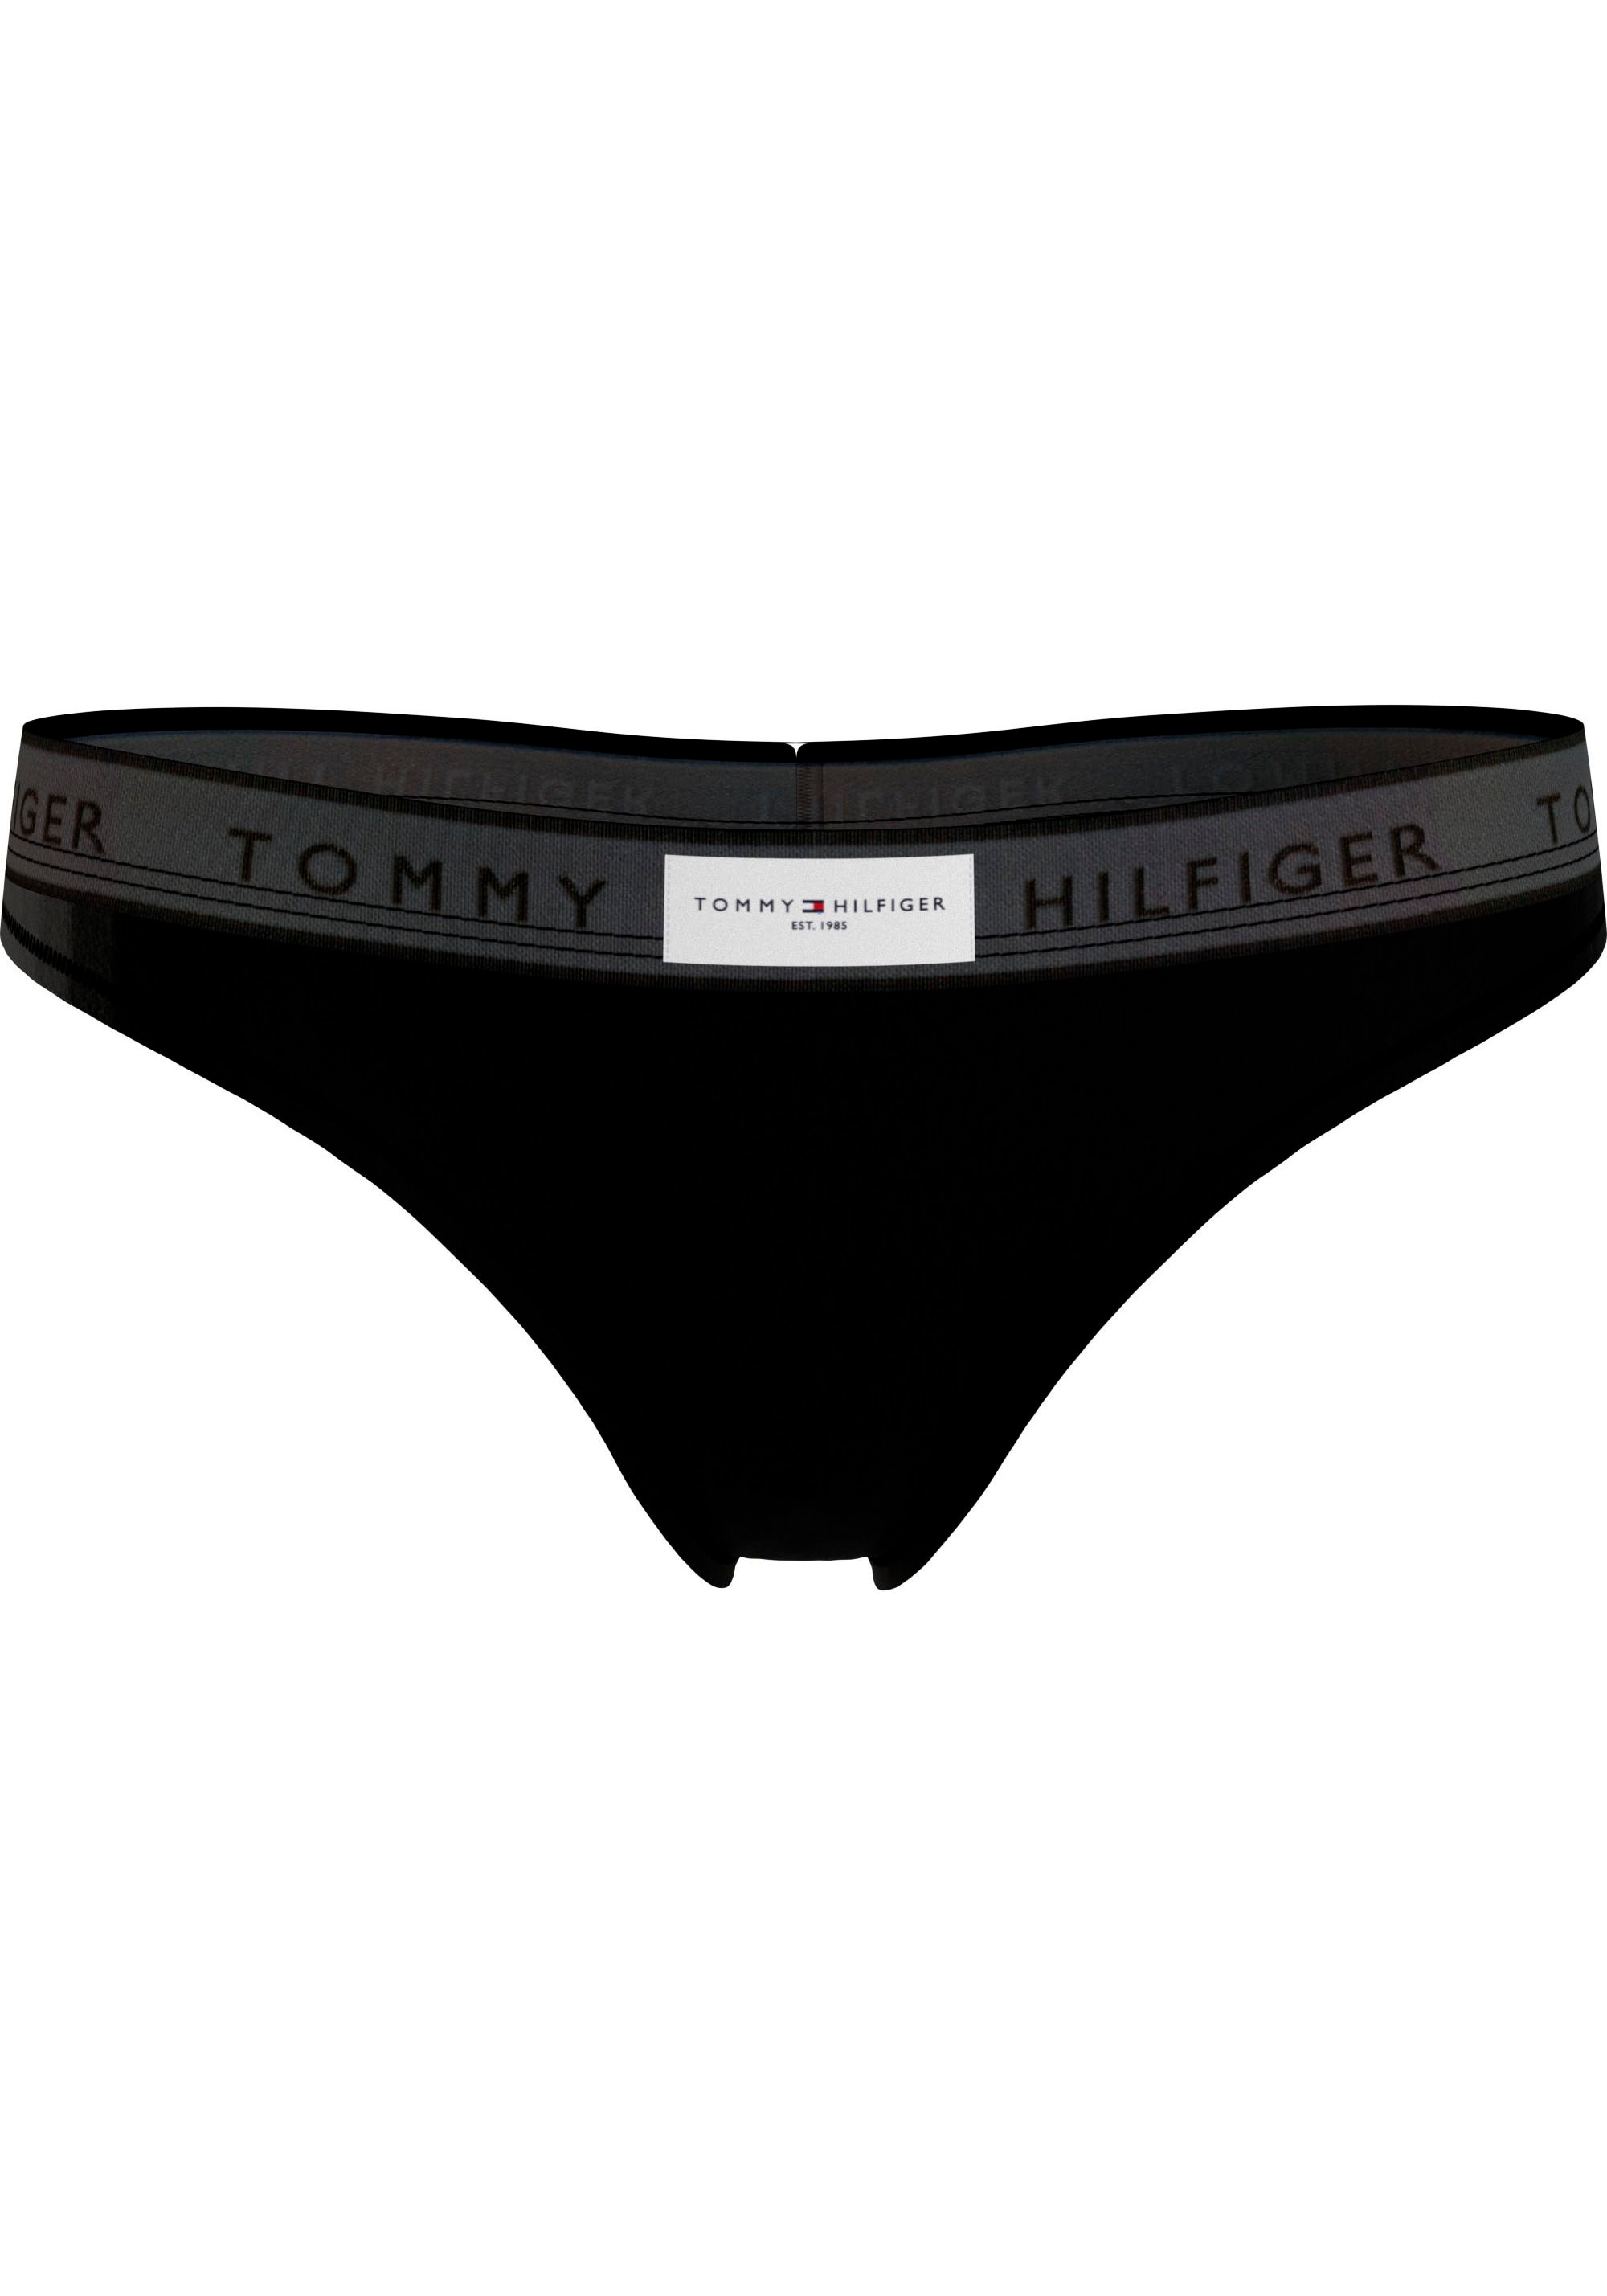 Tommy Hilfiger Underwear String »THONG (EXT SIZES)«, mit Tommy Hilfiger Logobund-Tommy Hilfiger 1